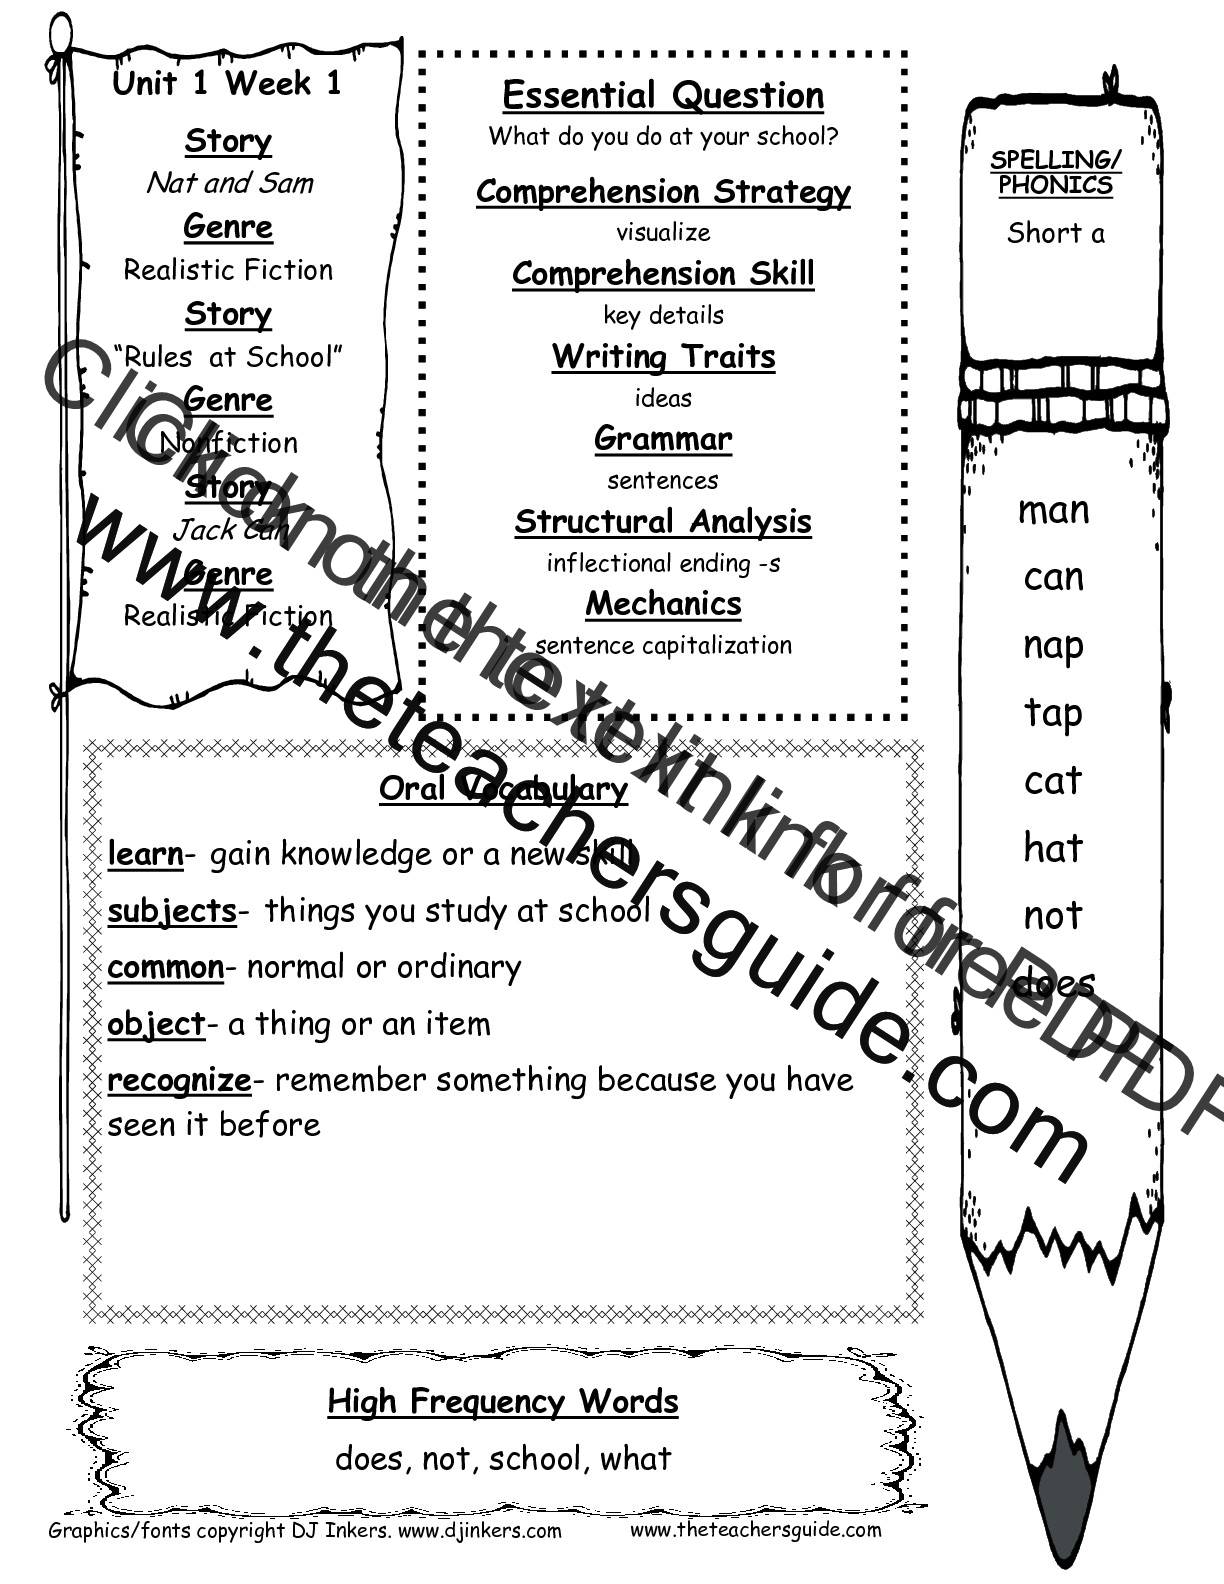 😝 Weekly homework sheet 5. Math Homework Sheets. 20190220